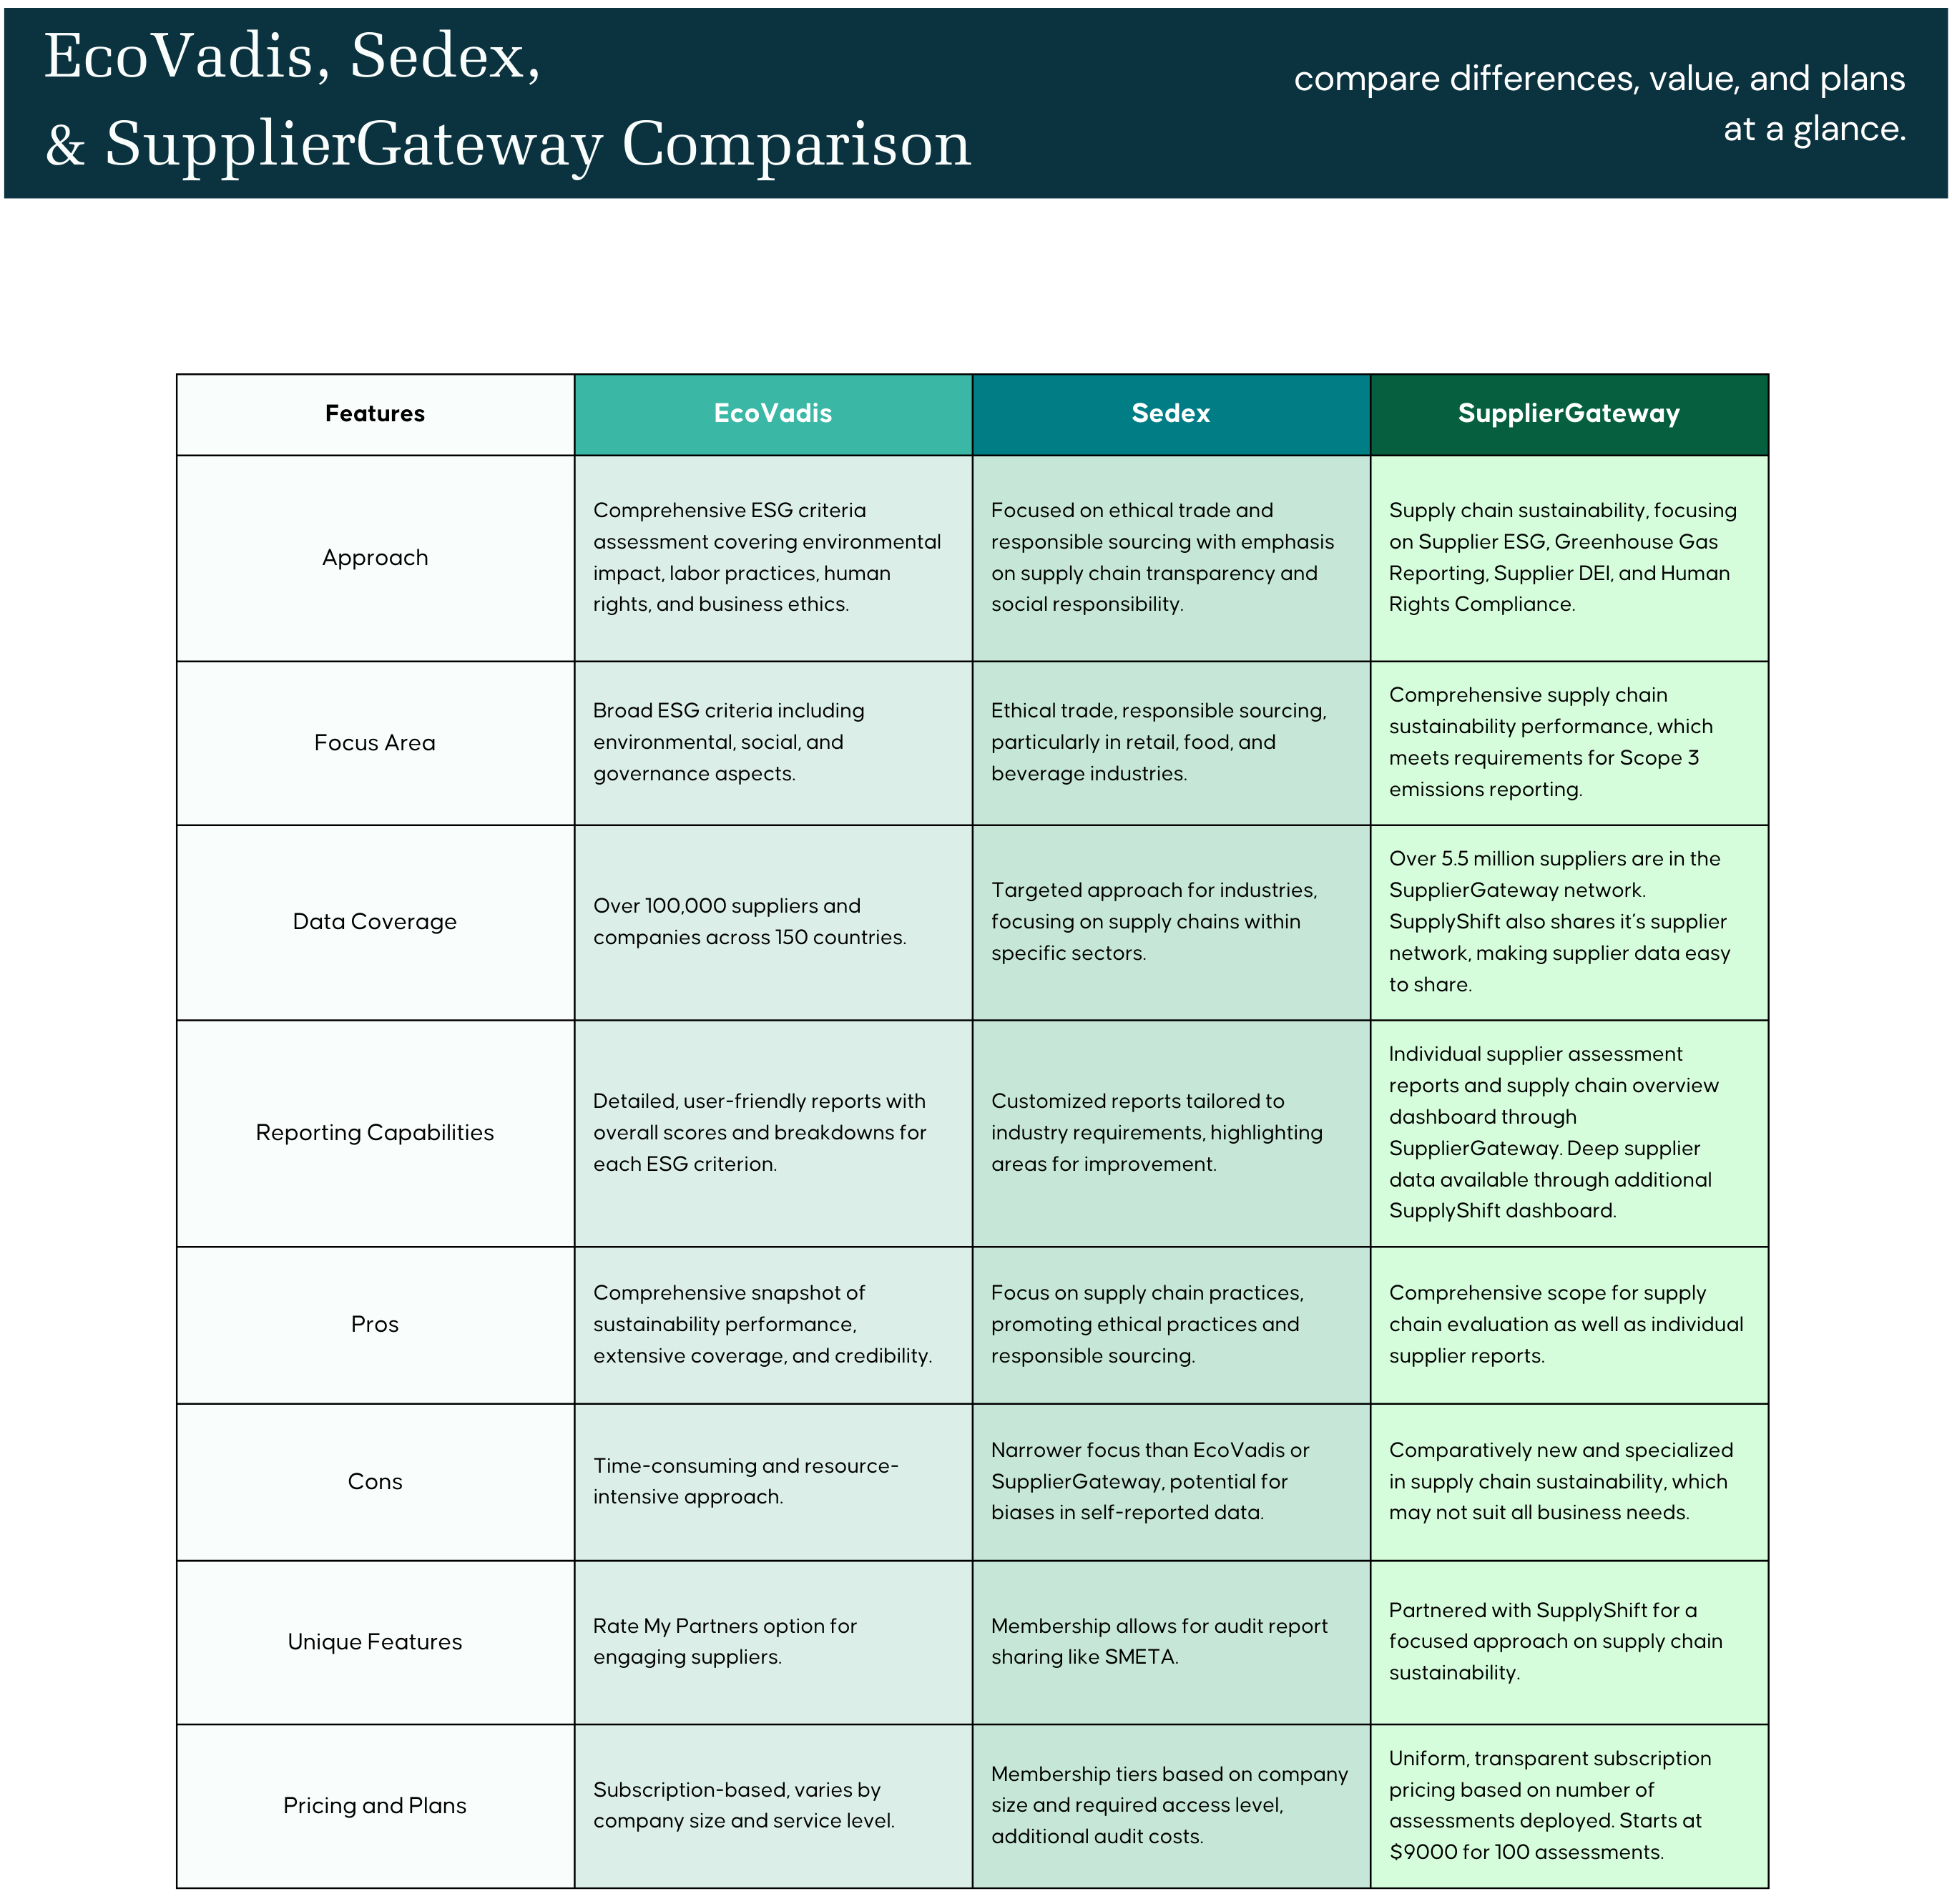 a comparison chart that compares EcoVadis, Sedex, and SupplierGateway